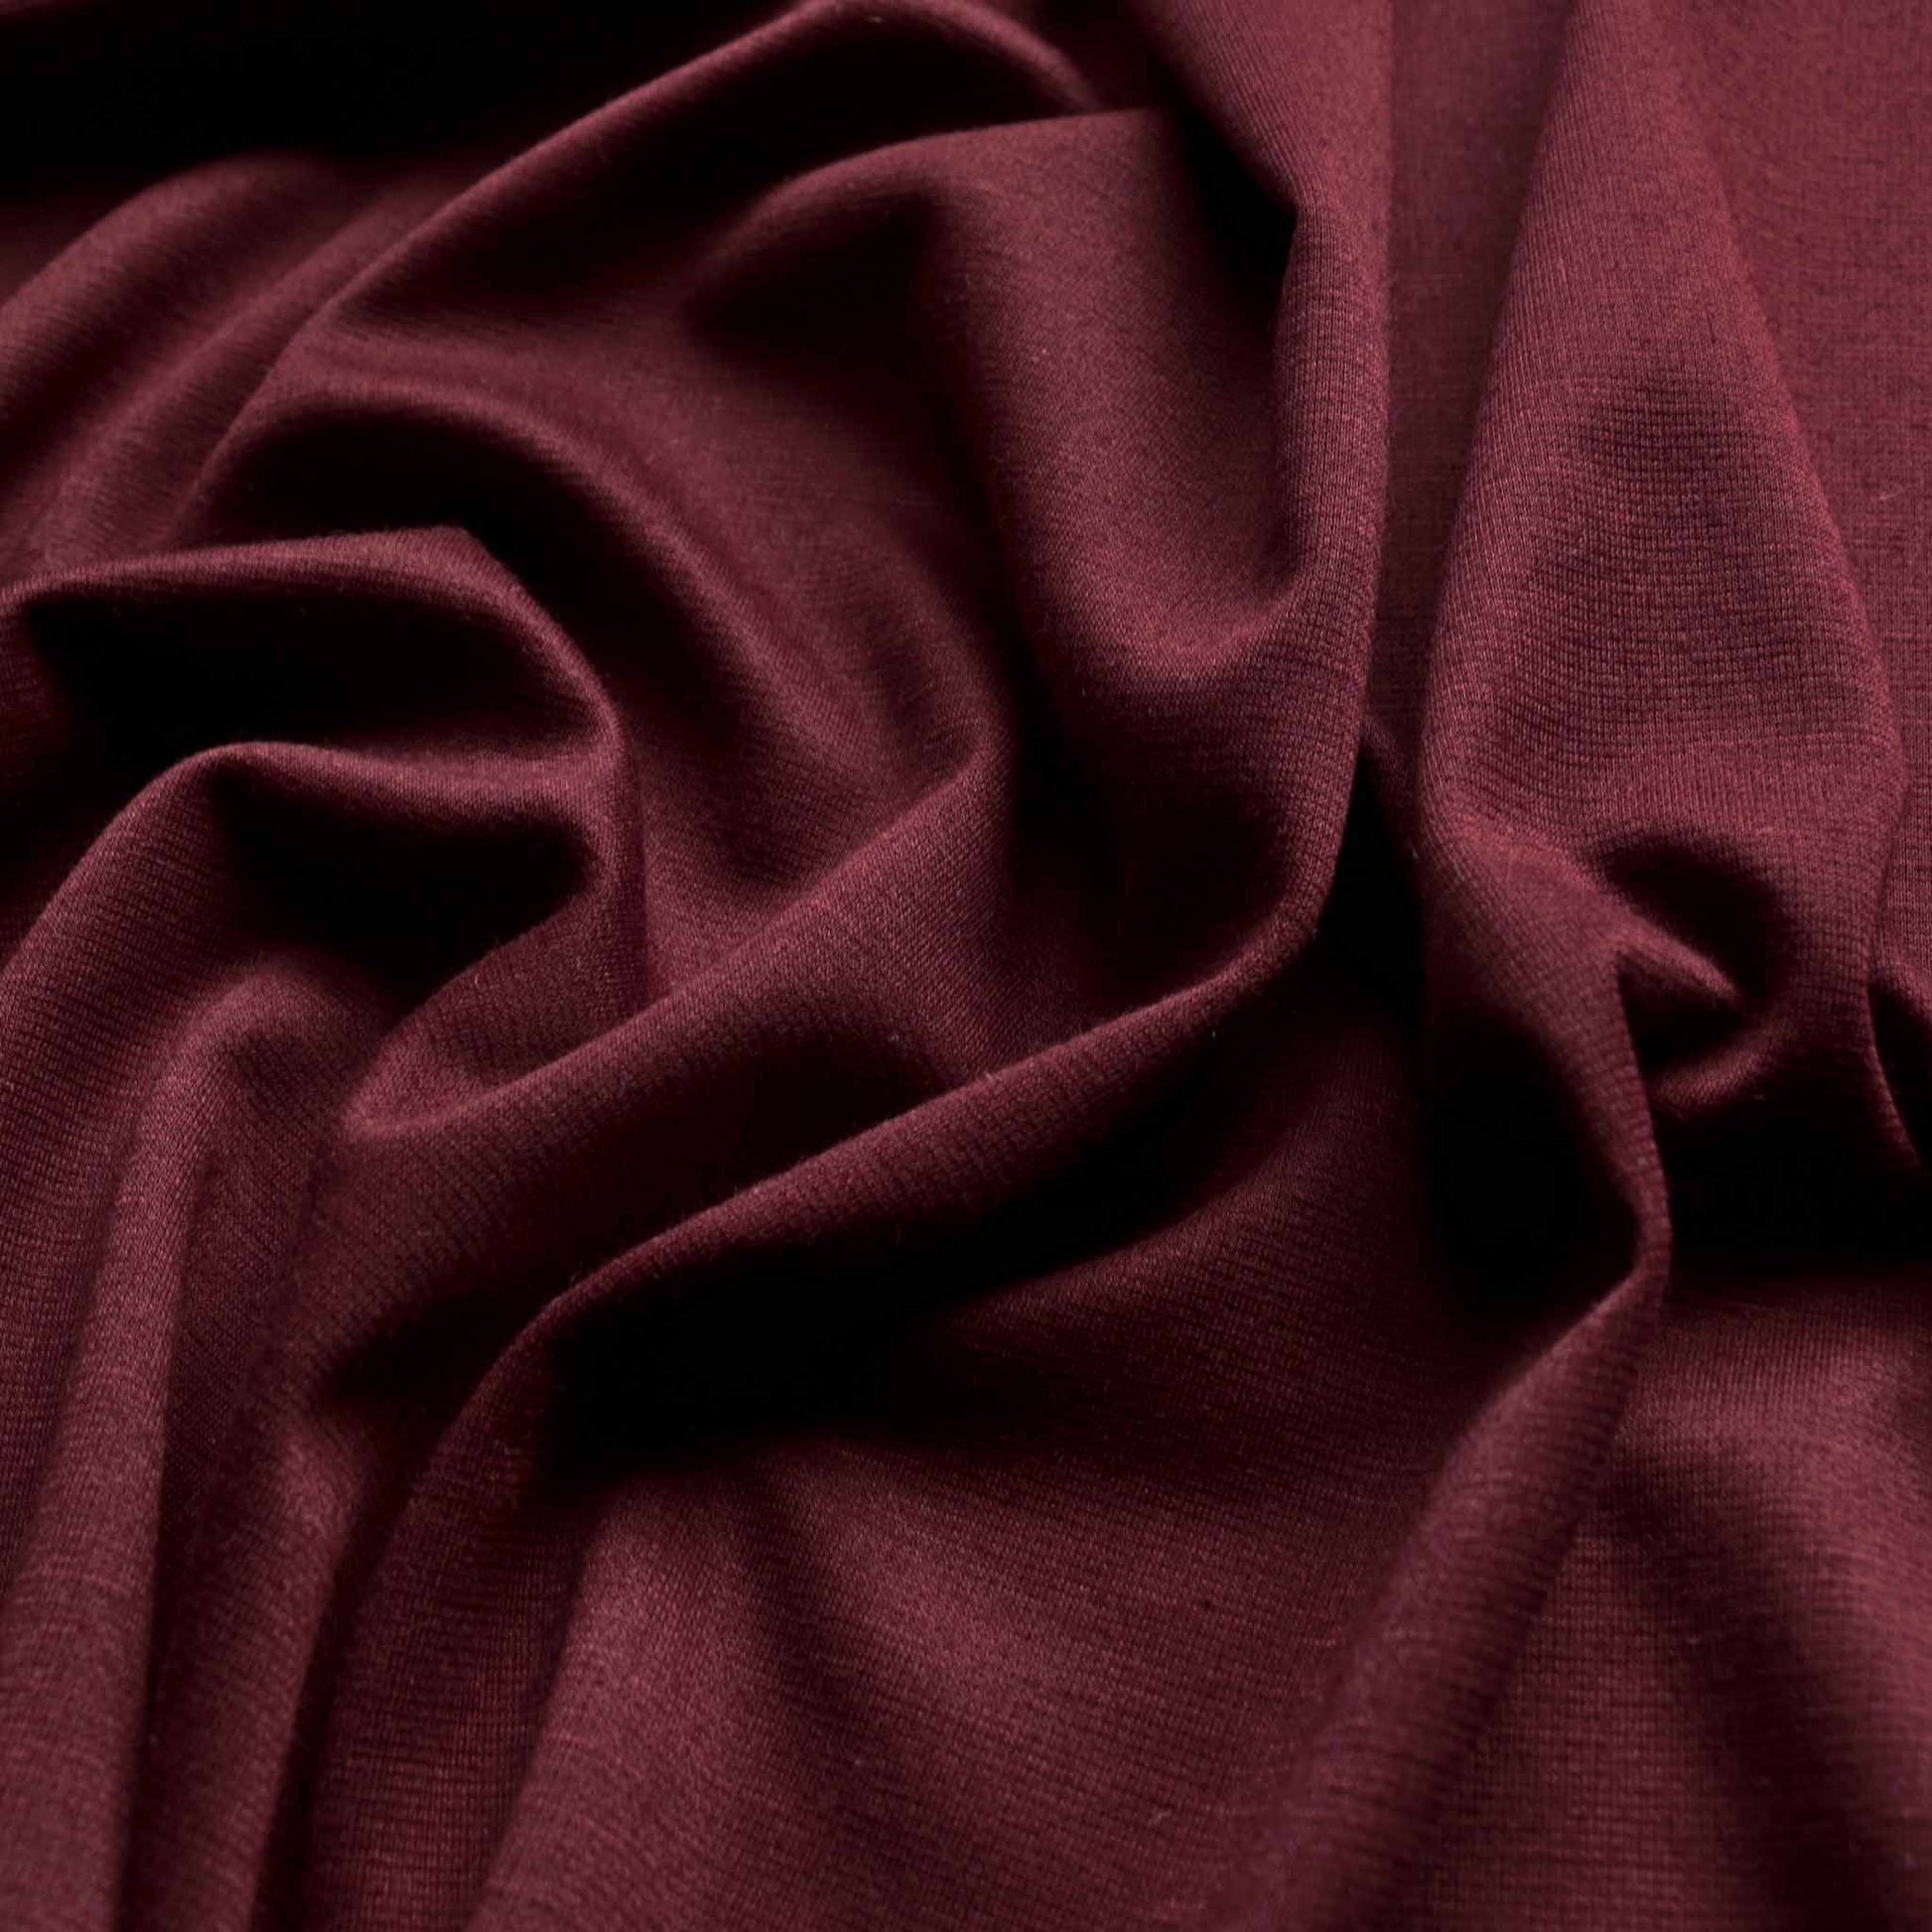 plain ponte roma jersey knit dress fabric in maroon